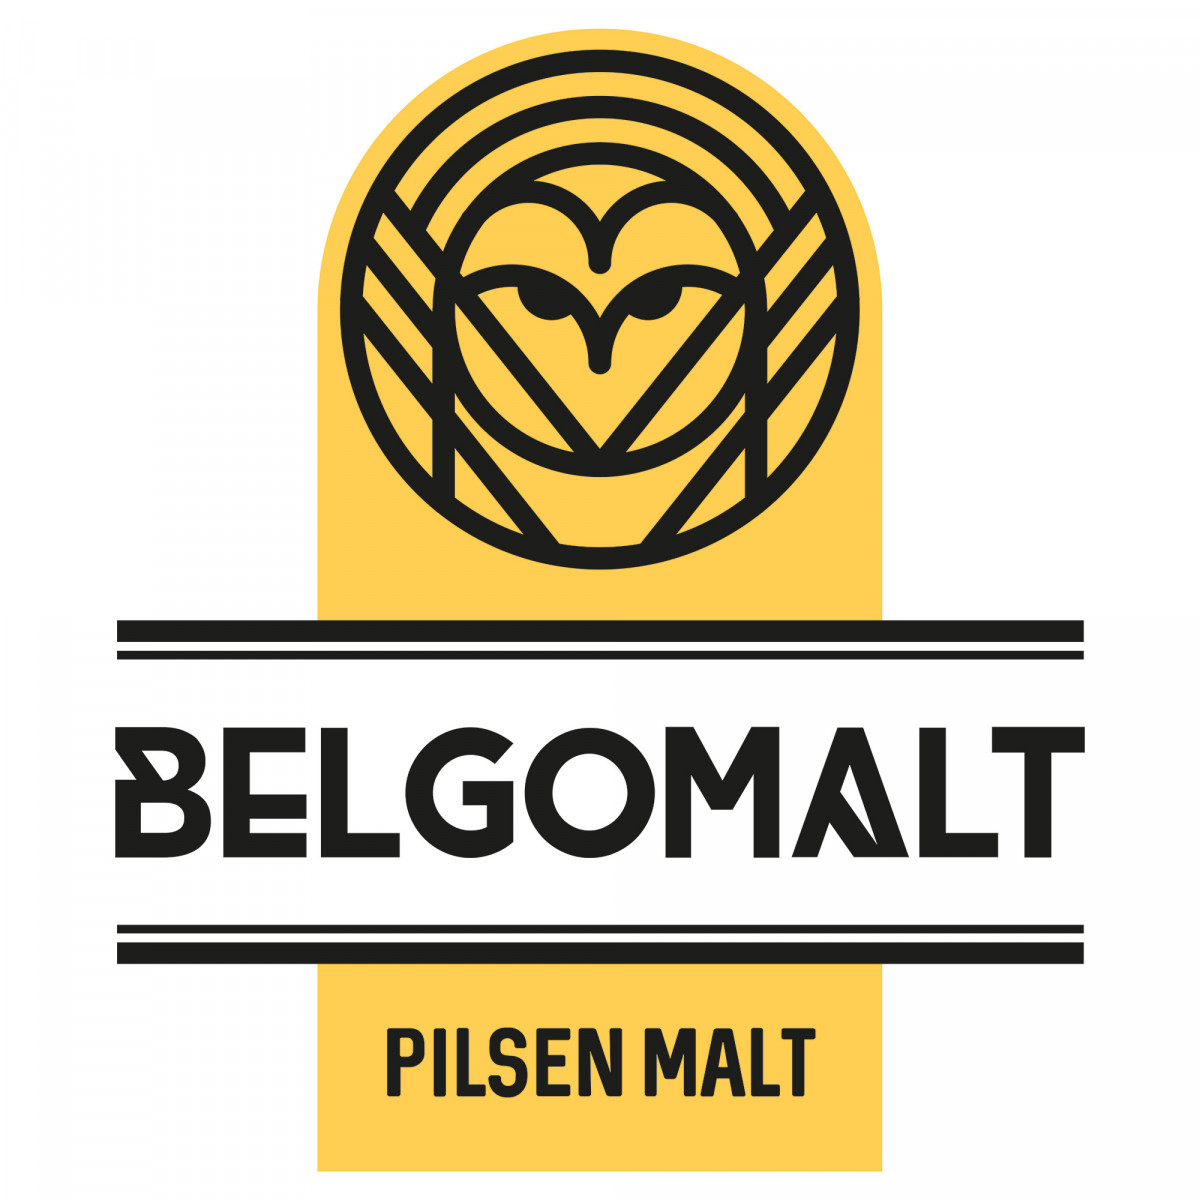 Belgomalt Pilsen 2.5 - 4.5 EBC 1 kg